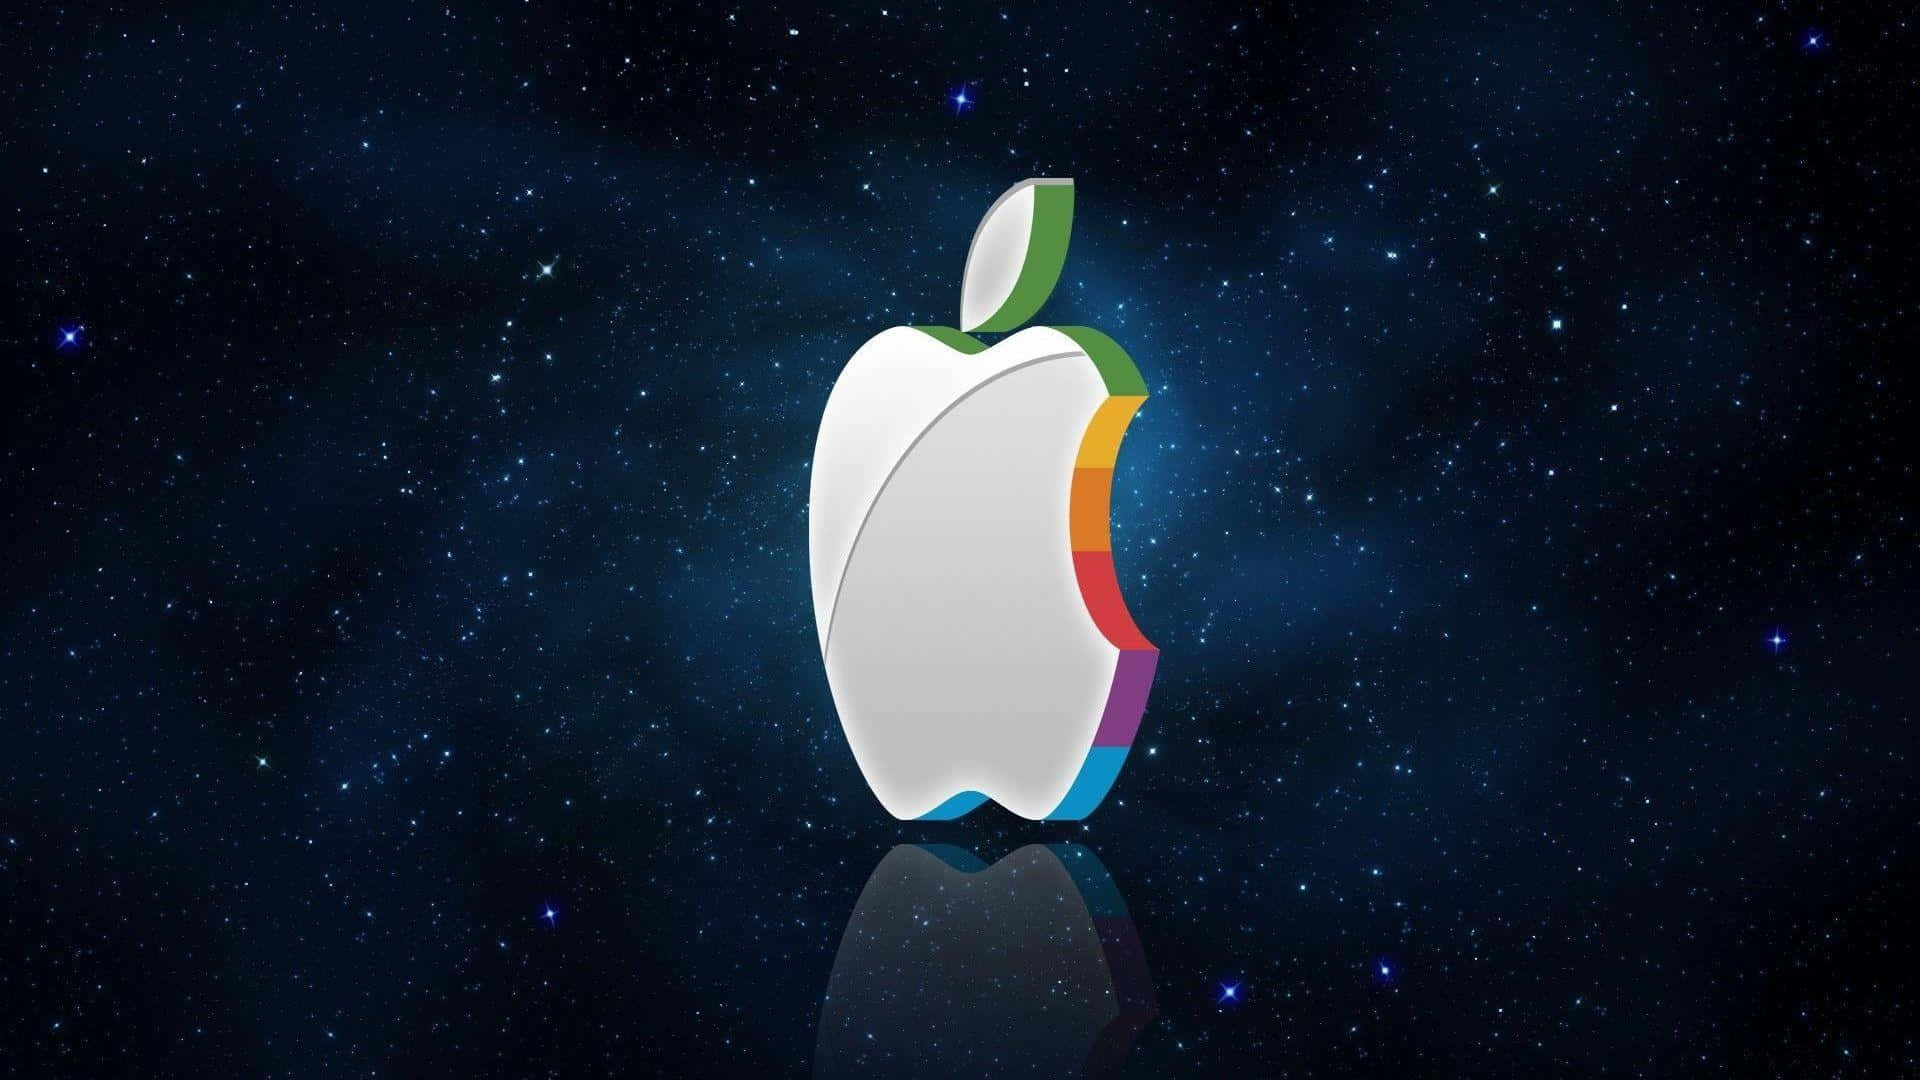 Fondosde Pantalla Hd Del Logotipo De Apple Fondo de pantalla